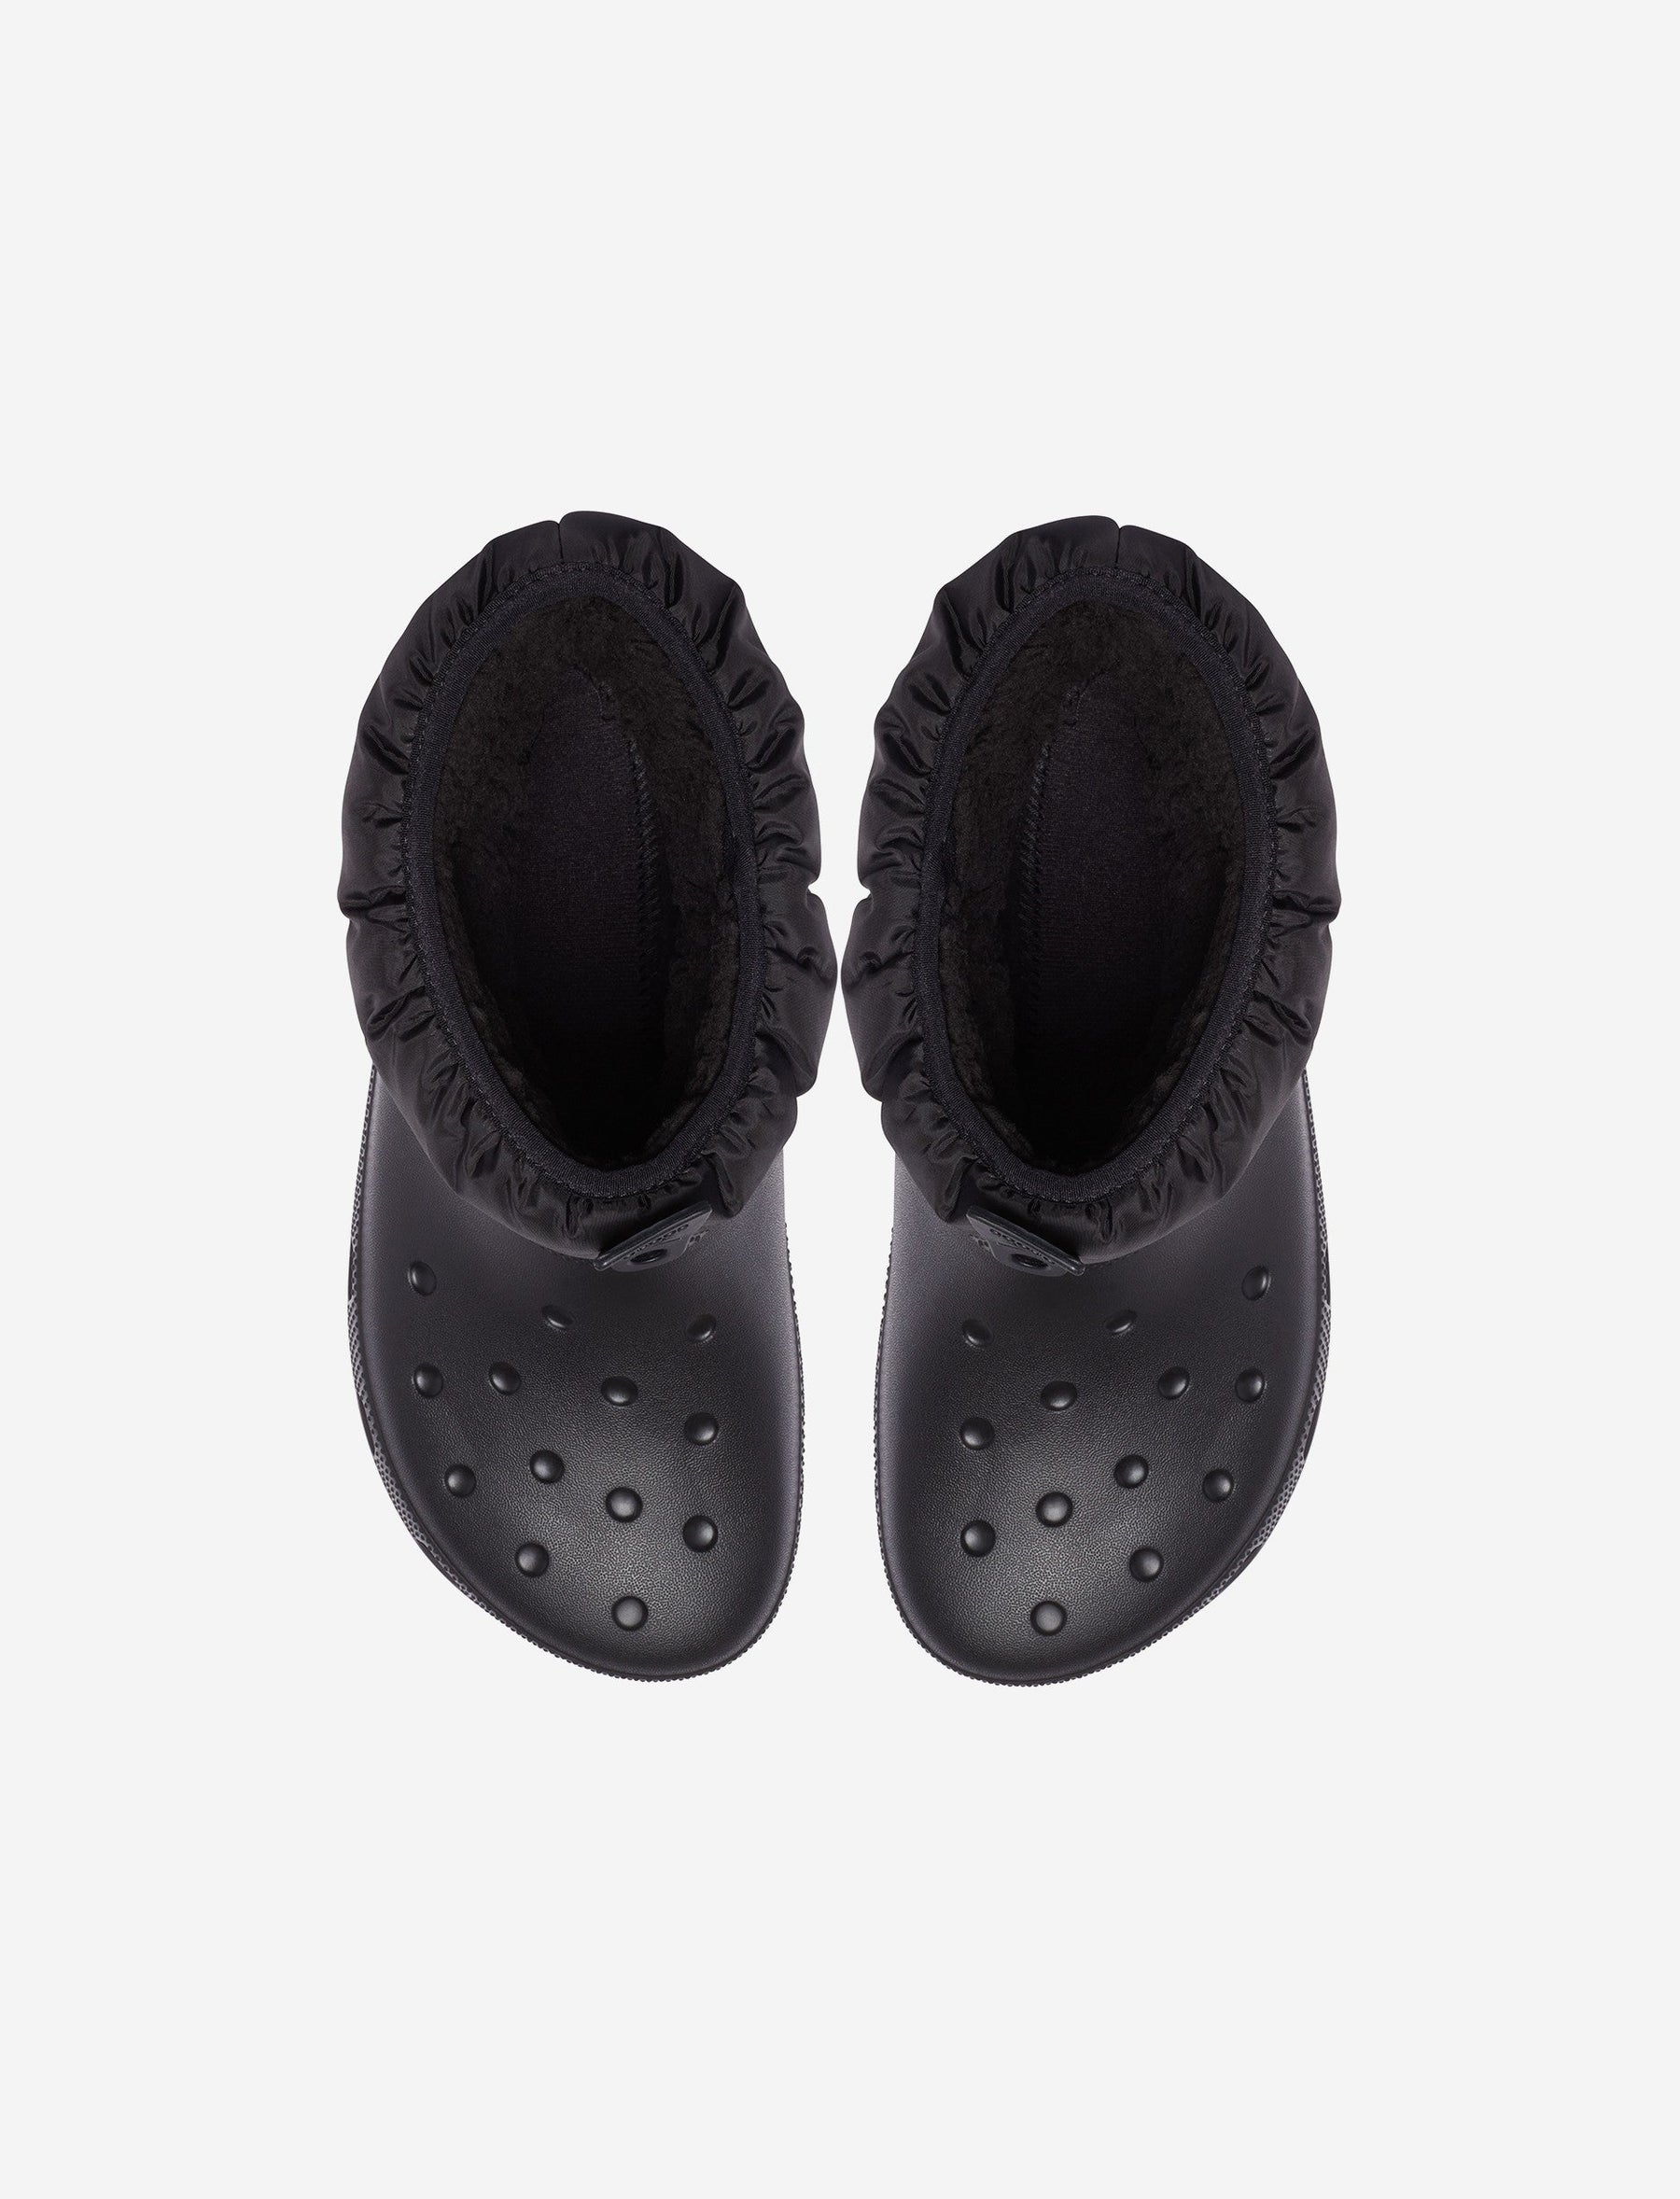 Crocs Women's Classic Neo Puff Shorty Boot - מגפיים לנשים קרוקס בצבע שחור-Crocs-34-35-נאקו